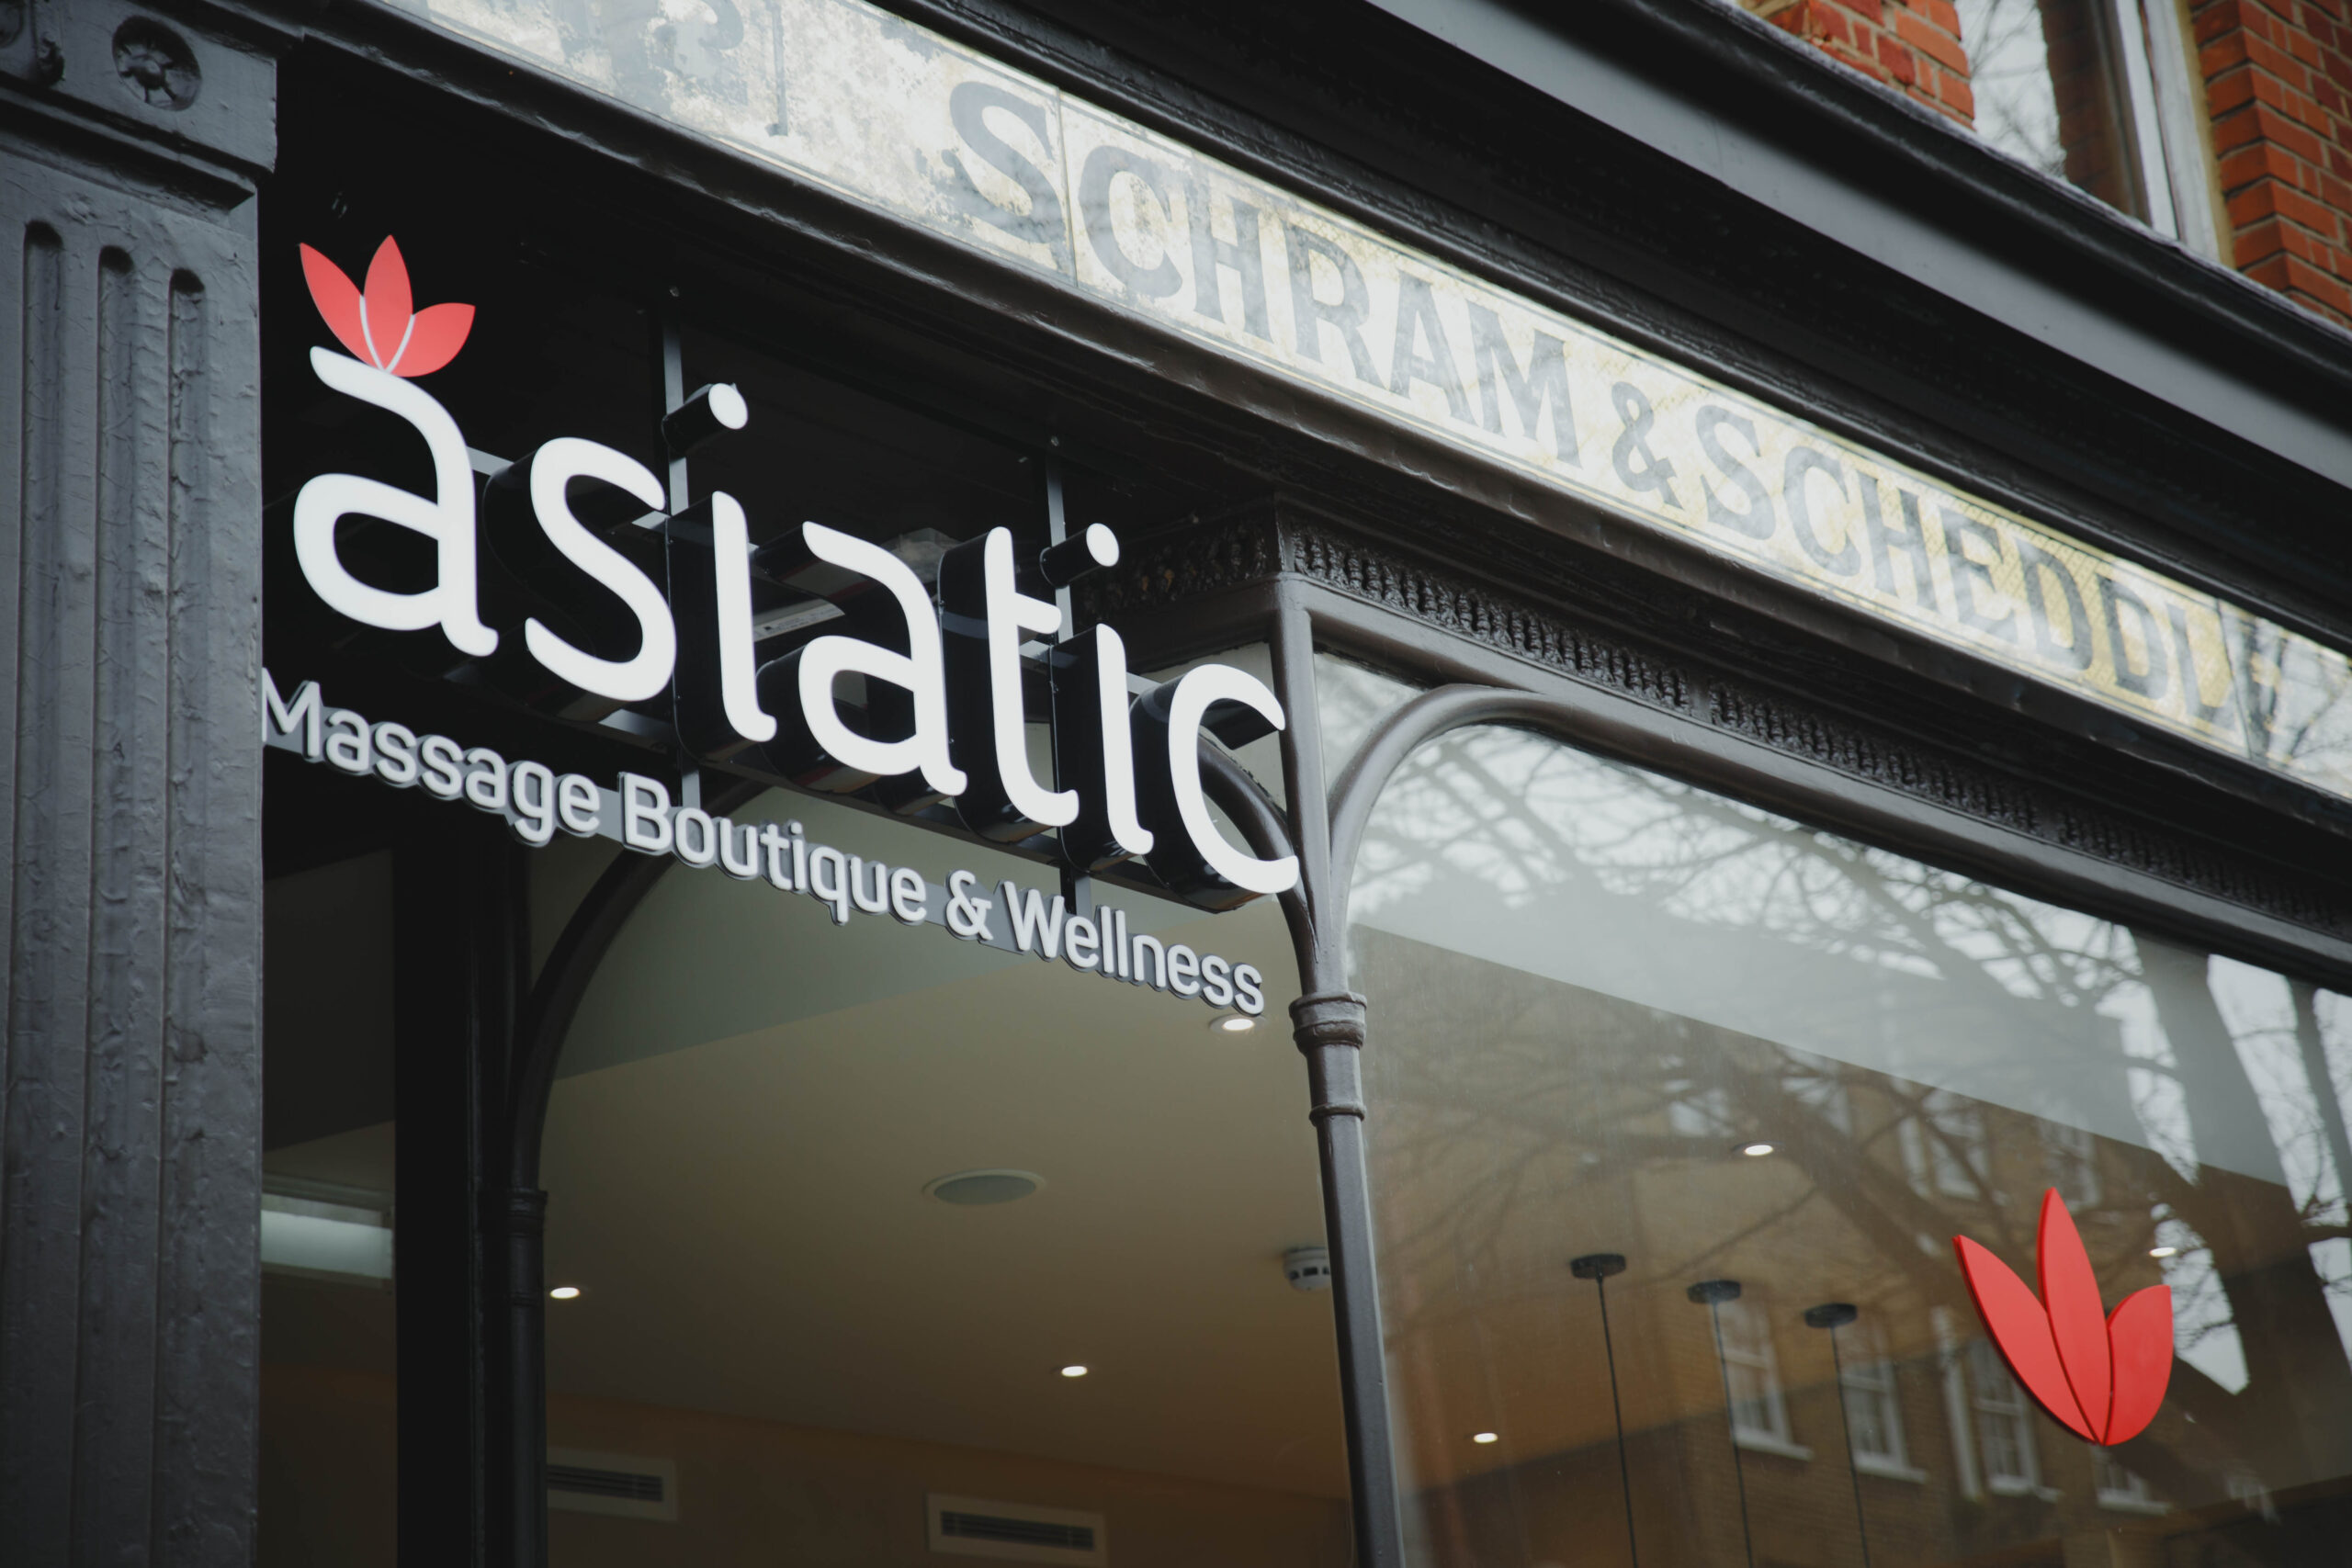 Asiatic massage London wellness centre.